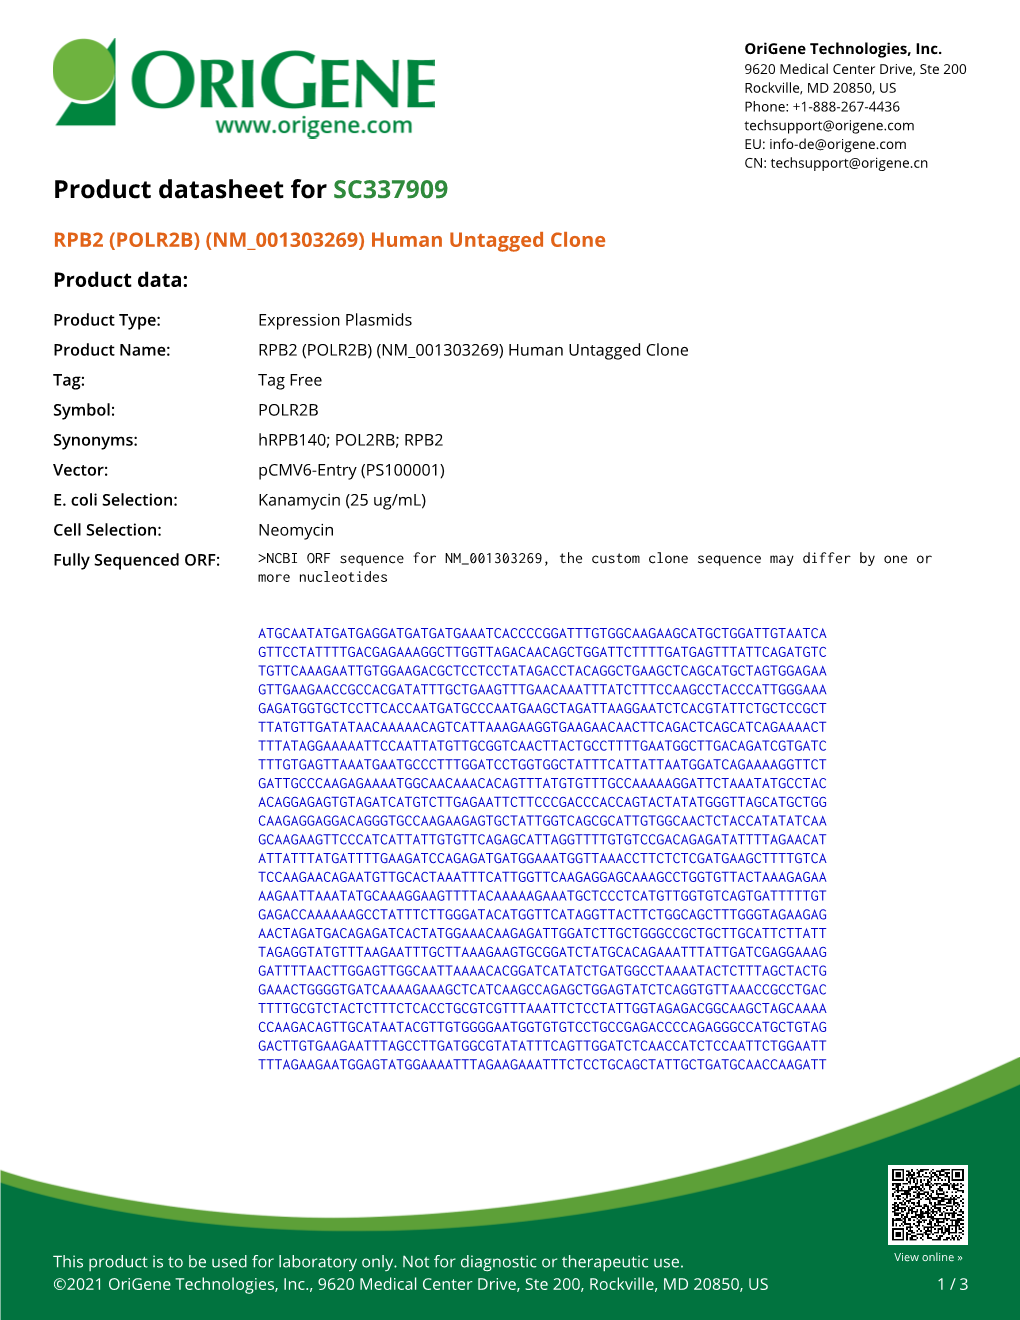 RPB2 (POLR2B) (NM 001303269) Human Untagged Clone Product Data